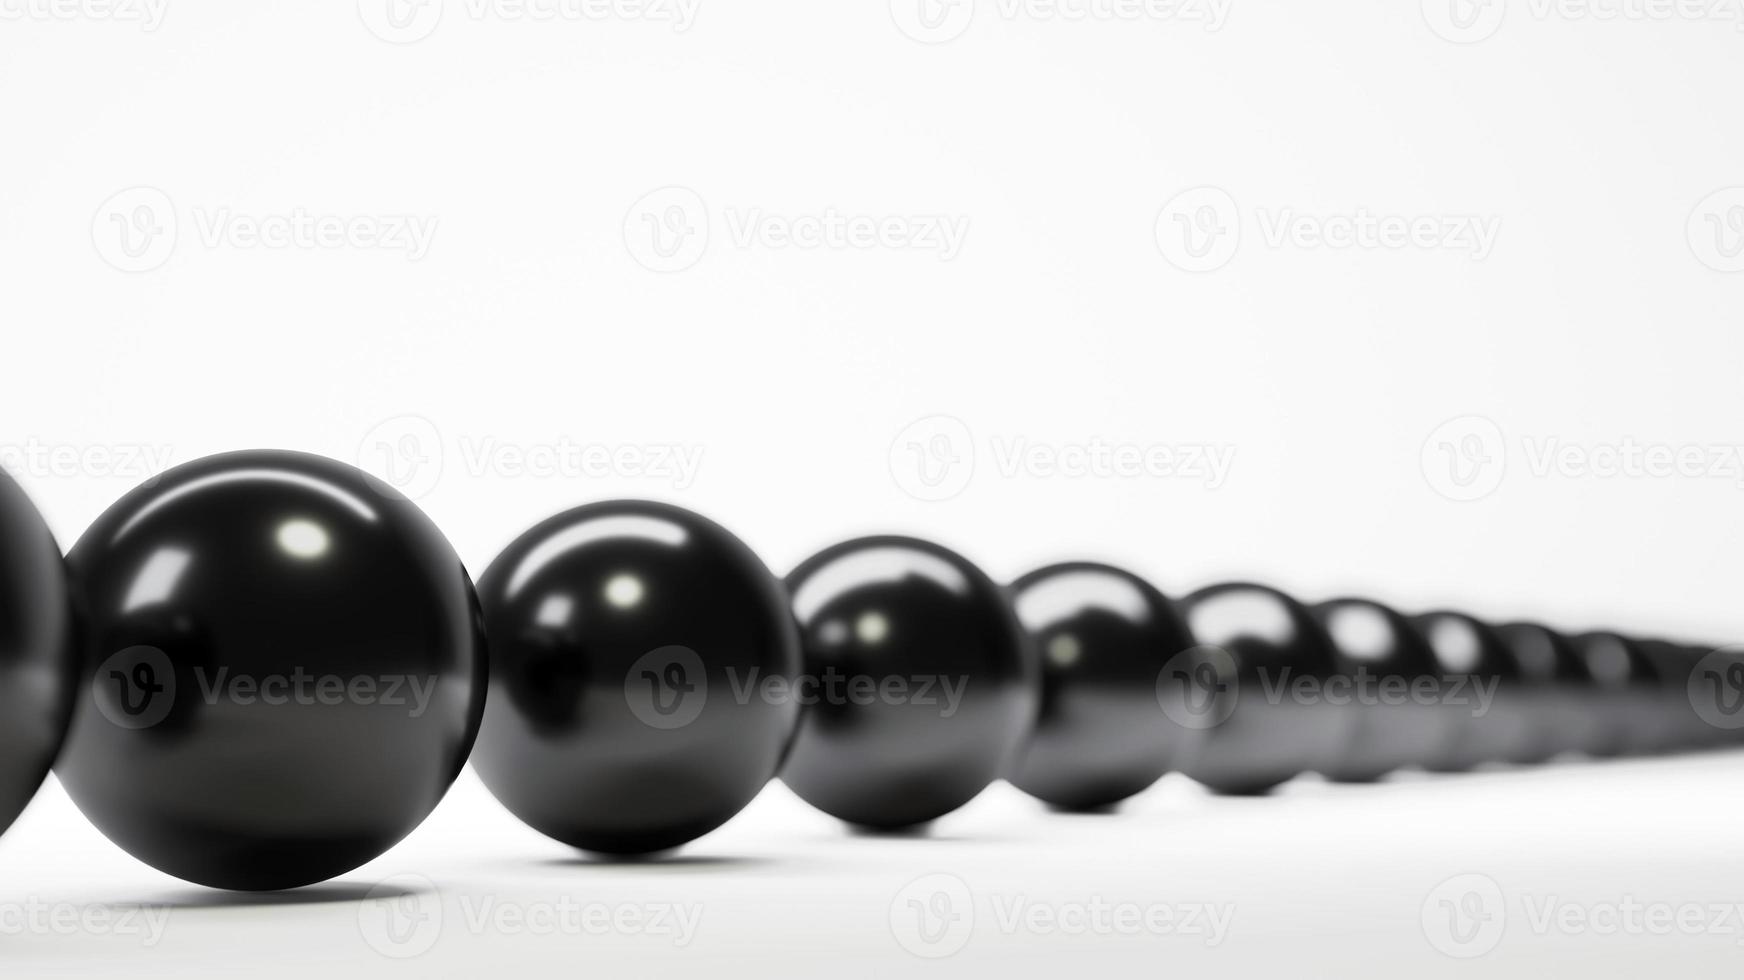 rij zwarte ballen scherptediepte foto